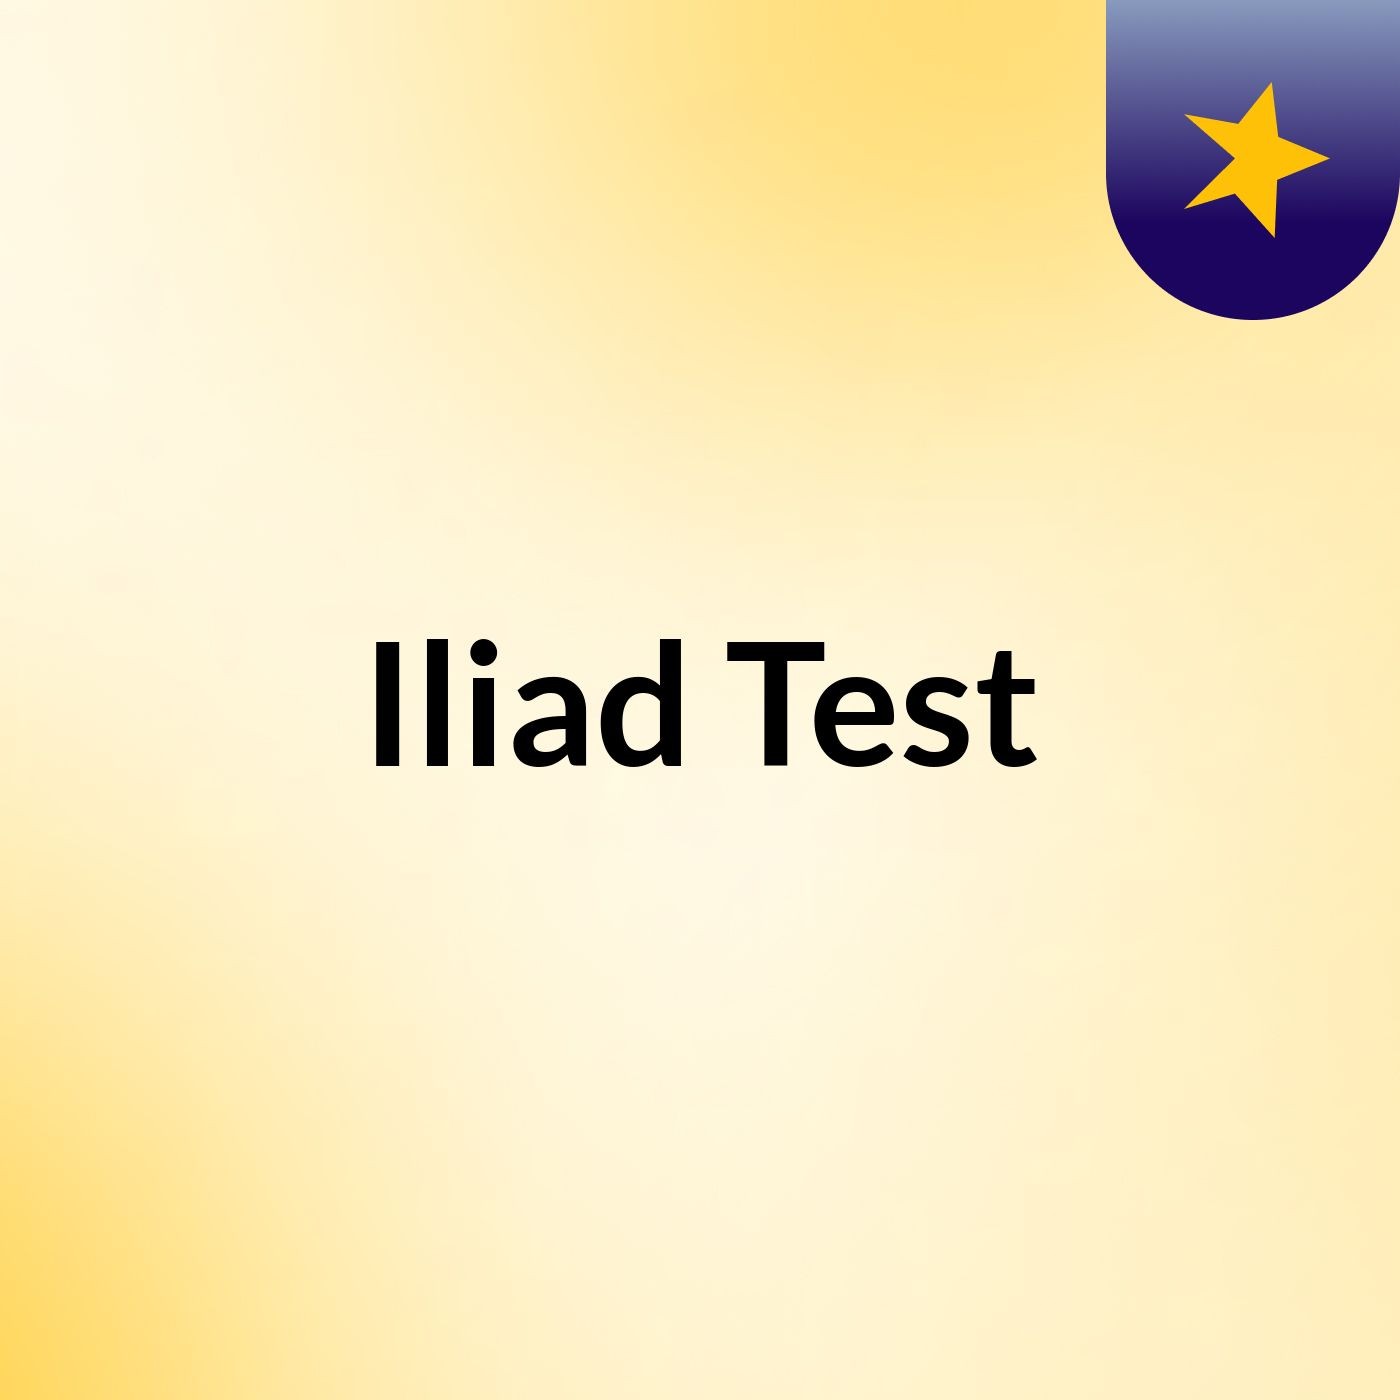 Iliad test chapter 3